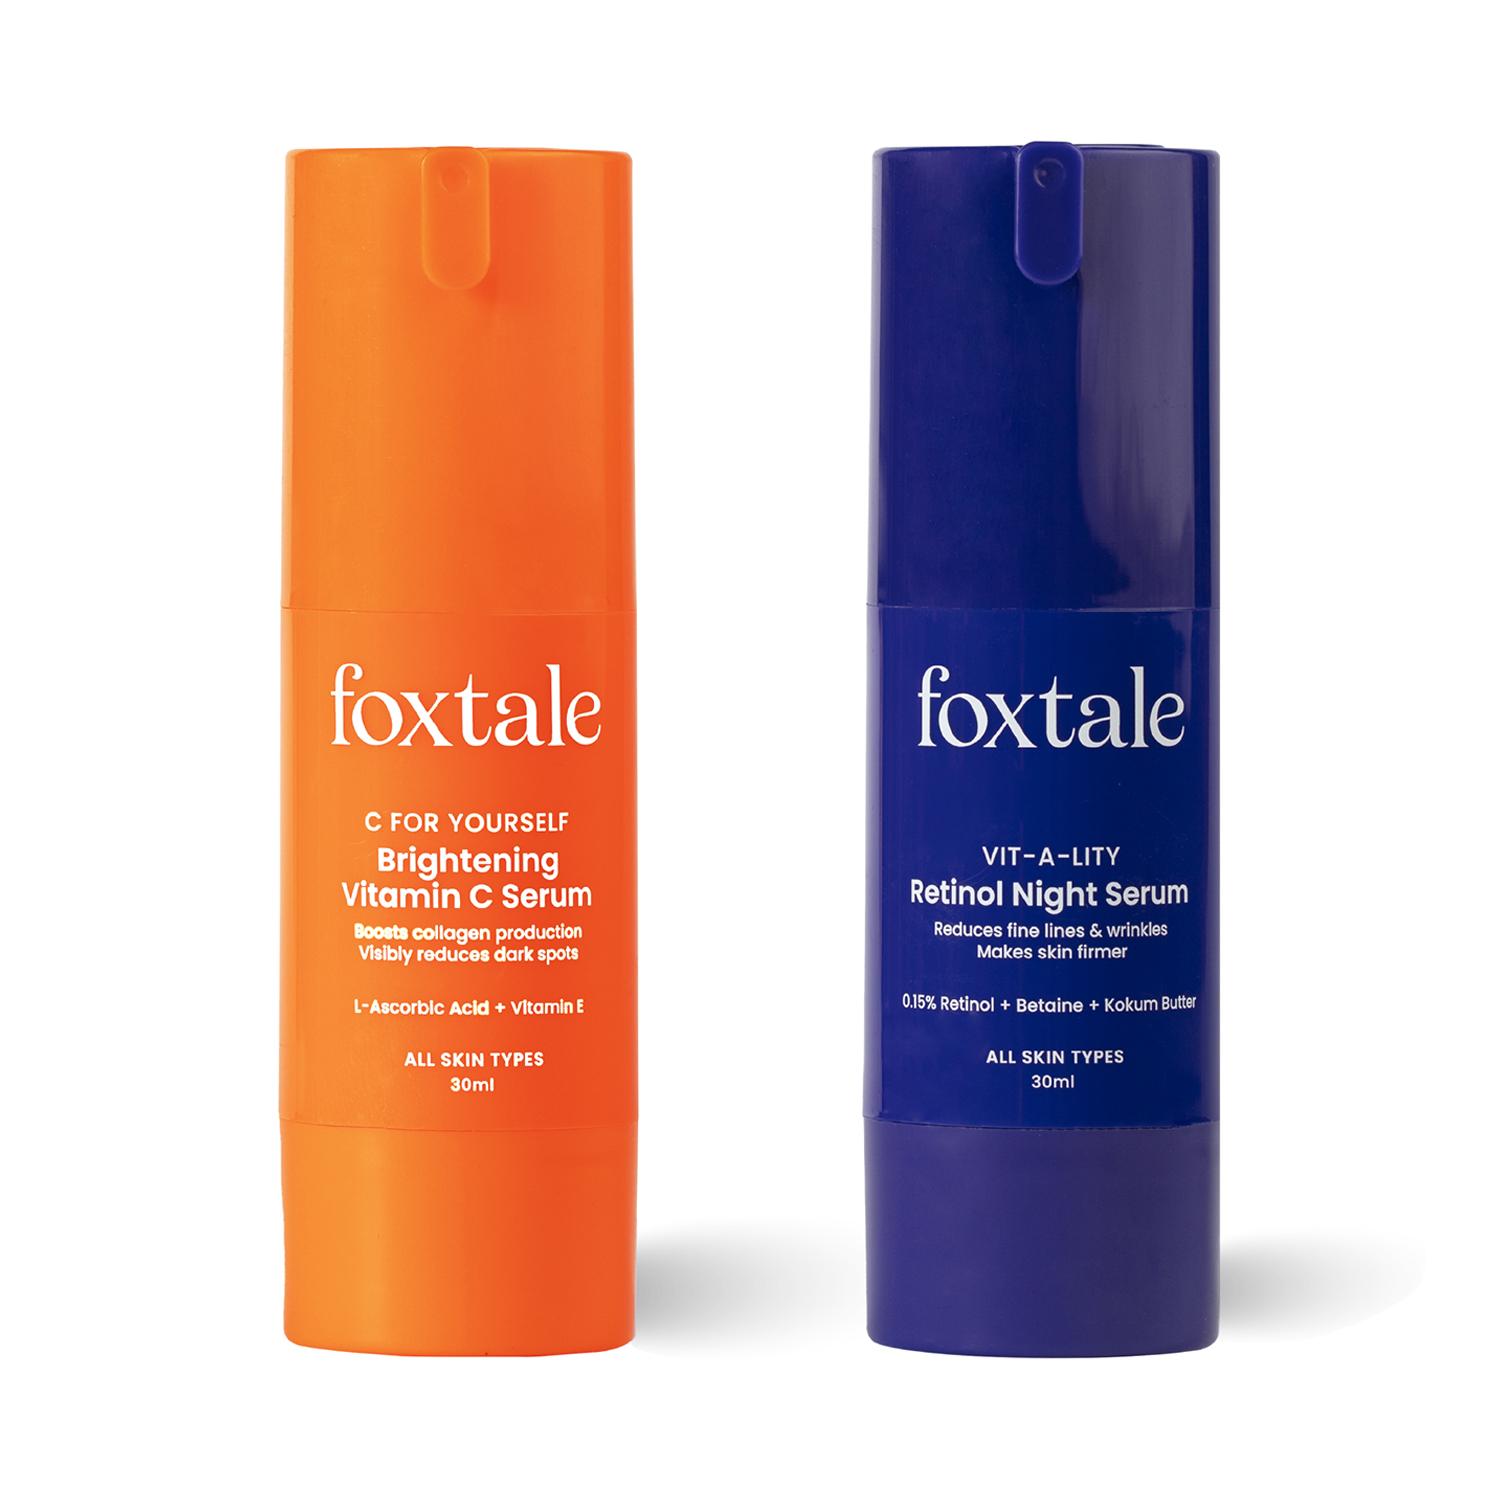 Foxtale 360° Age Protection Skin Care Kit Combo-C For Yourself Vitamin C Serum Retinol Night Serum